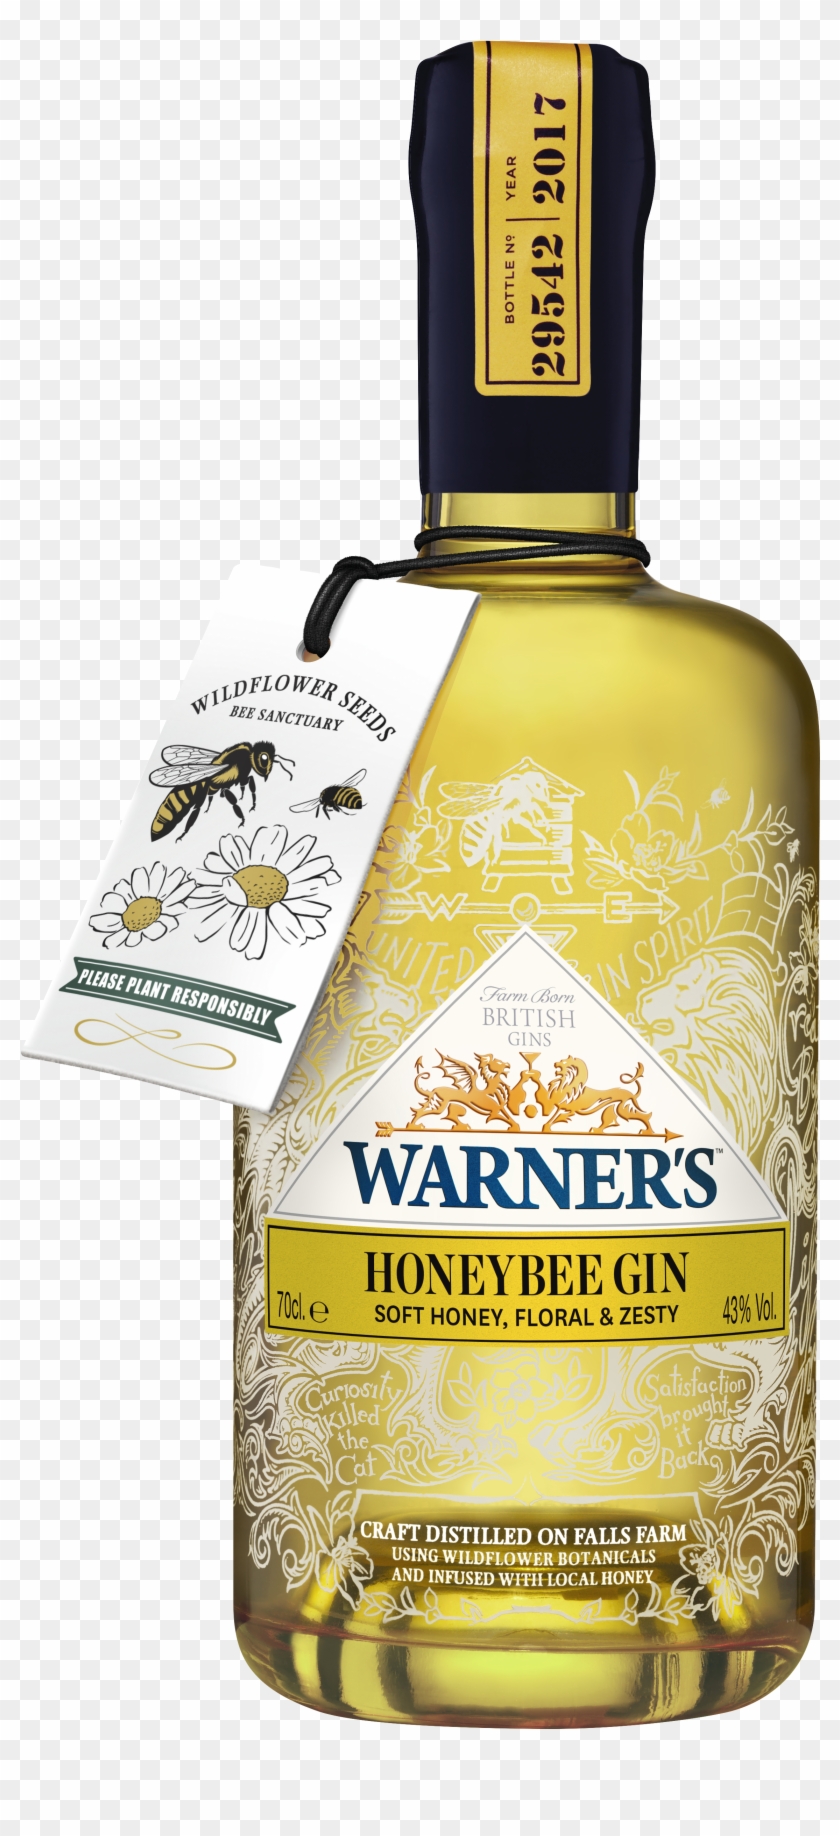 Warner's Honeybee Gin Buy Online Uk 5cl 20cl & 70cl - Warner Edwards Clipart #4200676